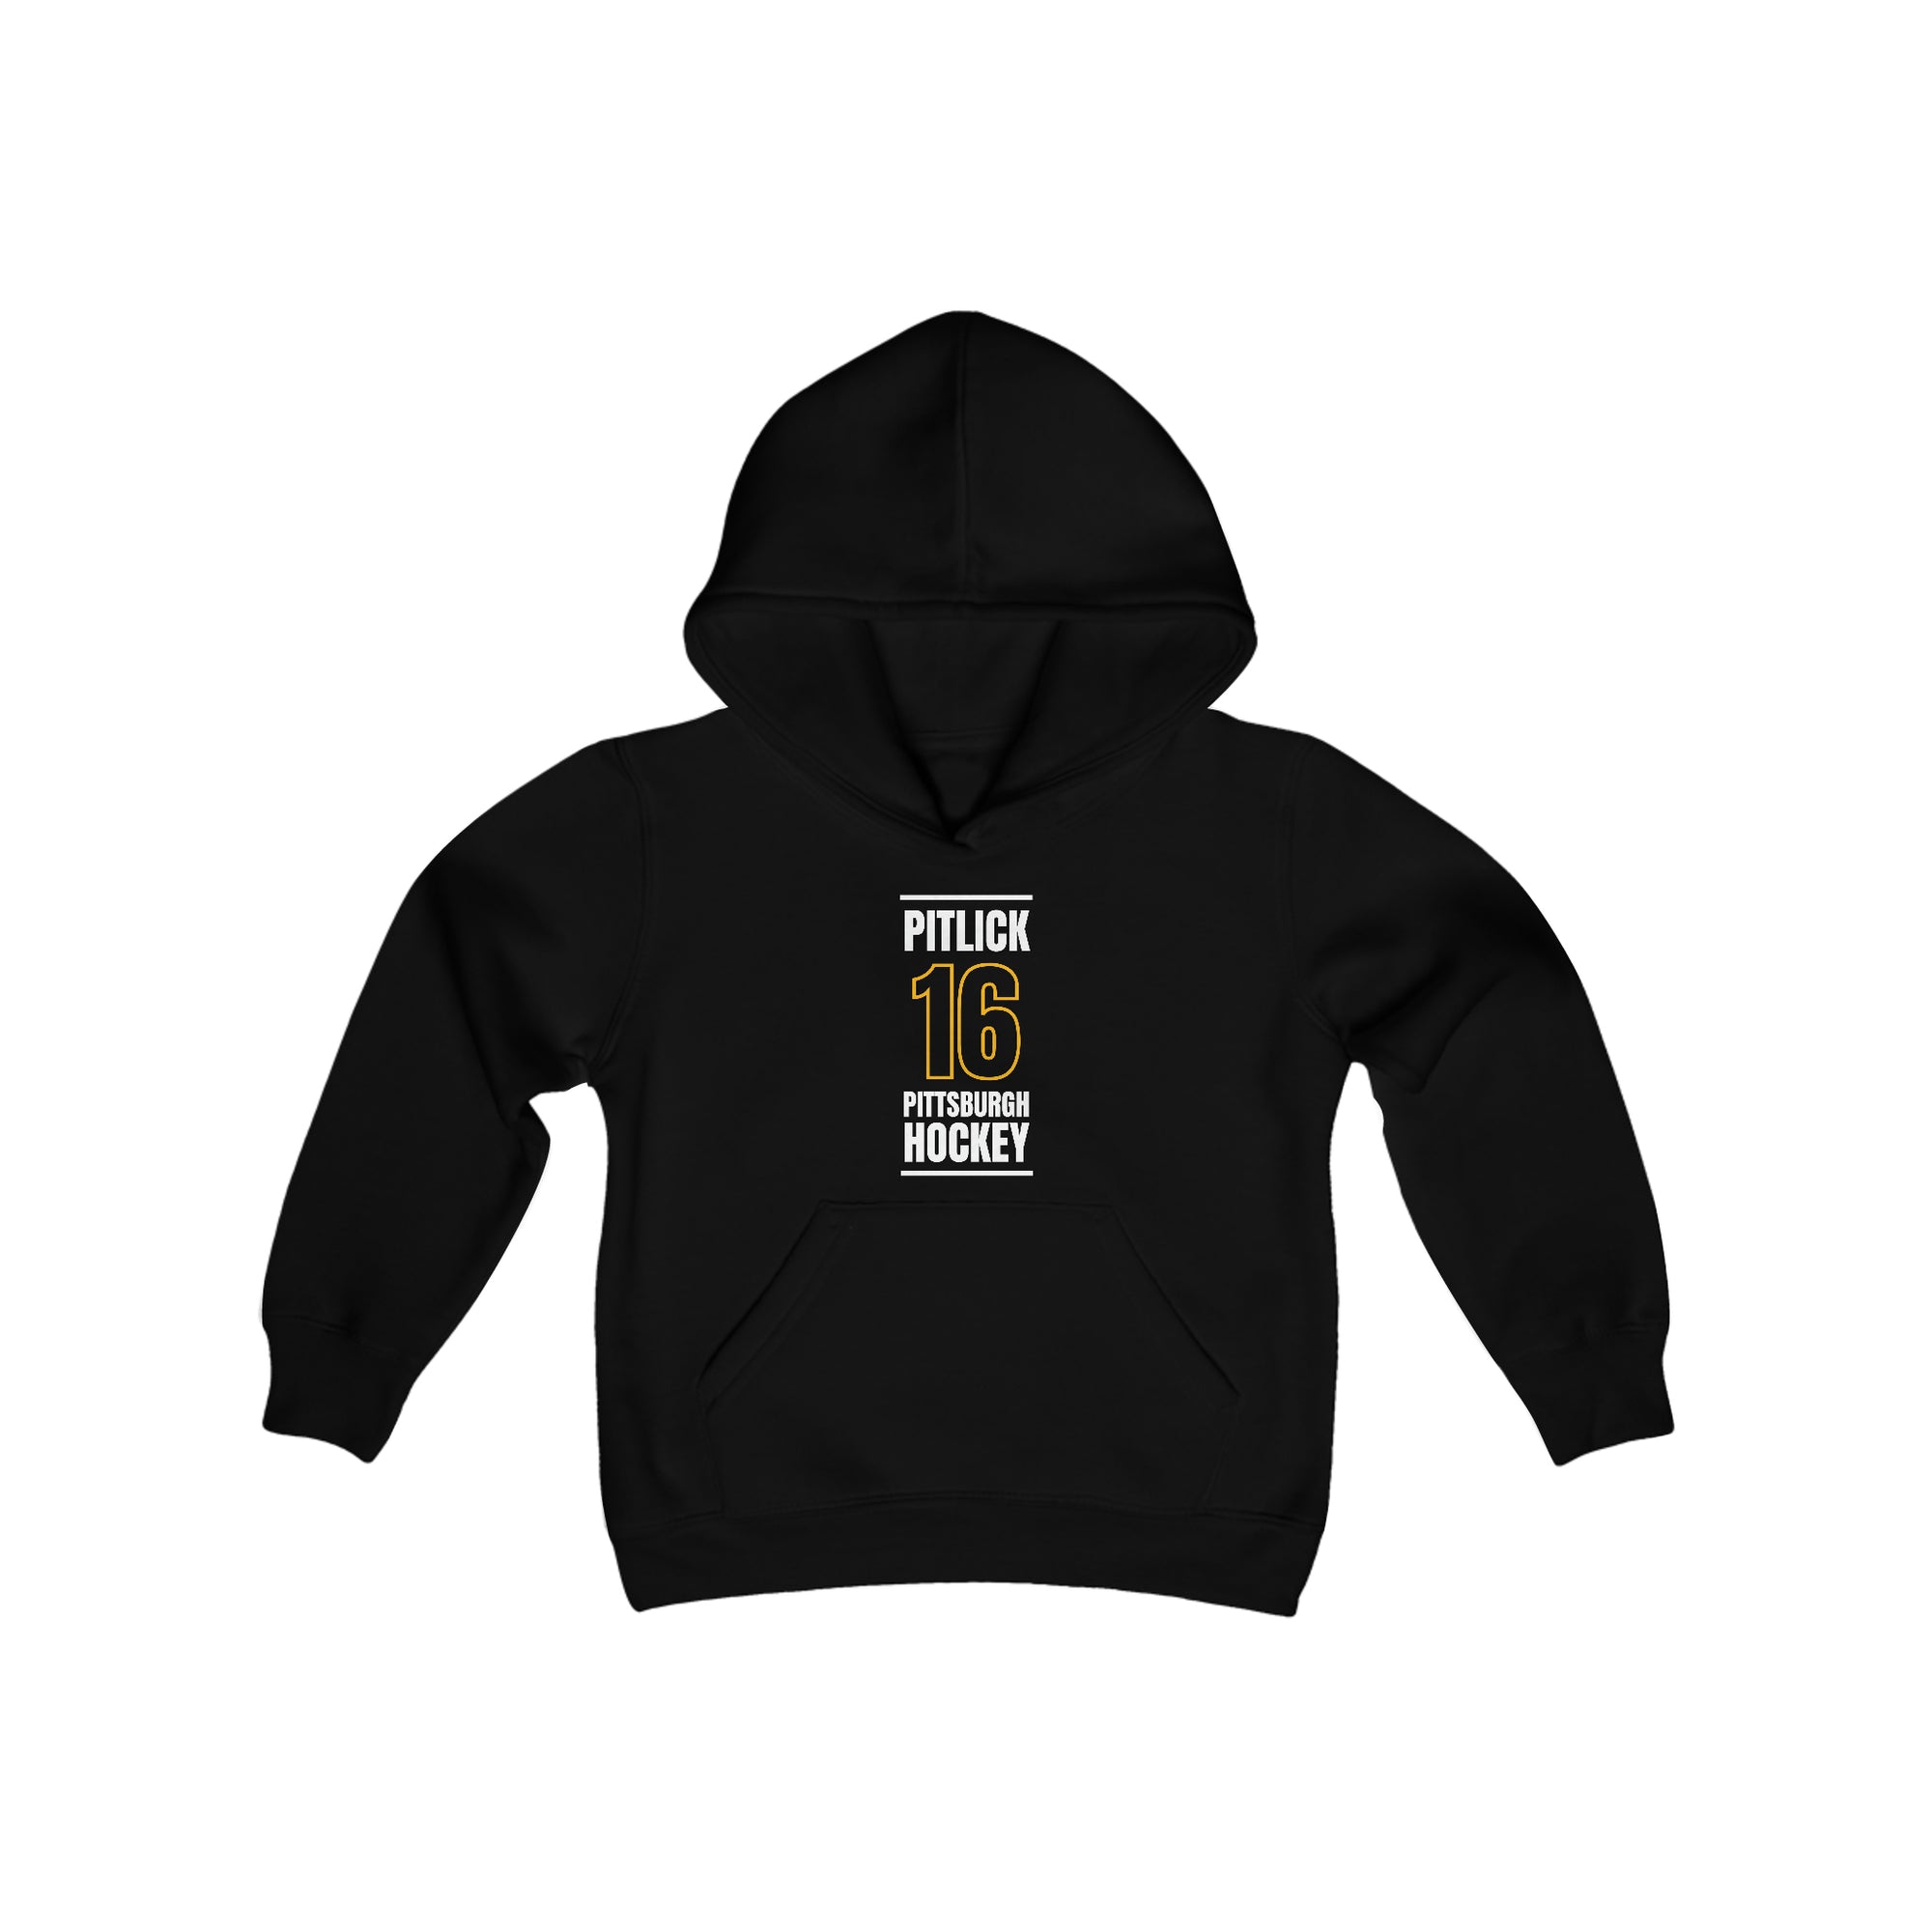 Pitlick 16 Pittsburgh Hockey Black Vertical Design Youth Hooded Sweatshirt